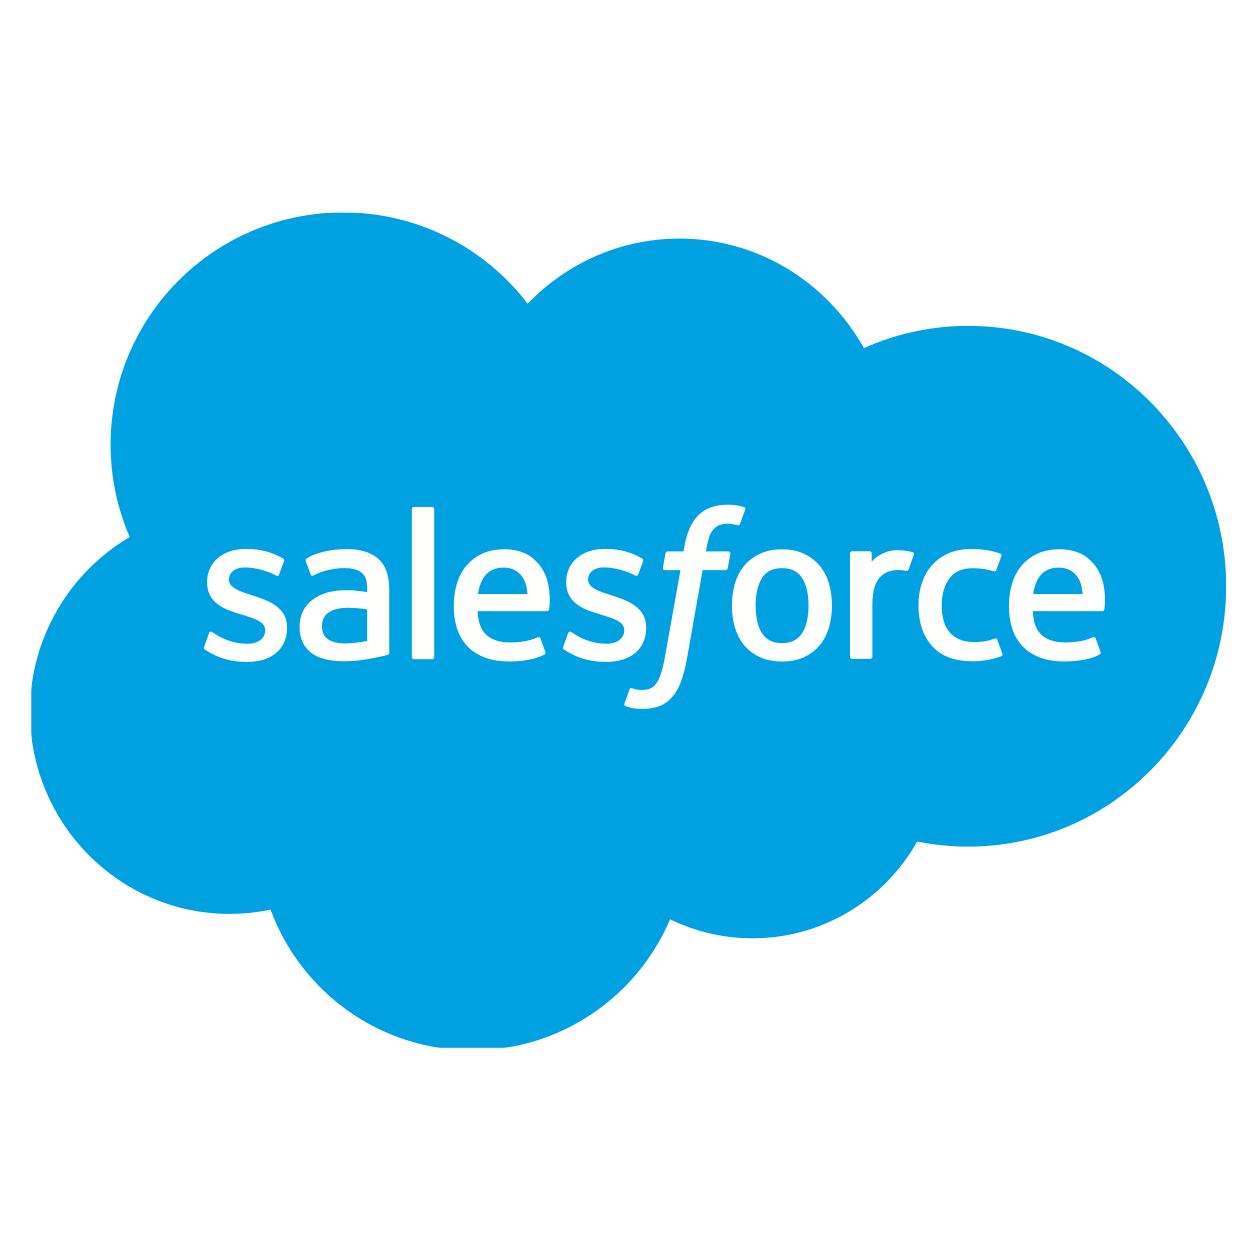 salesforce new logo